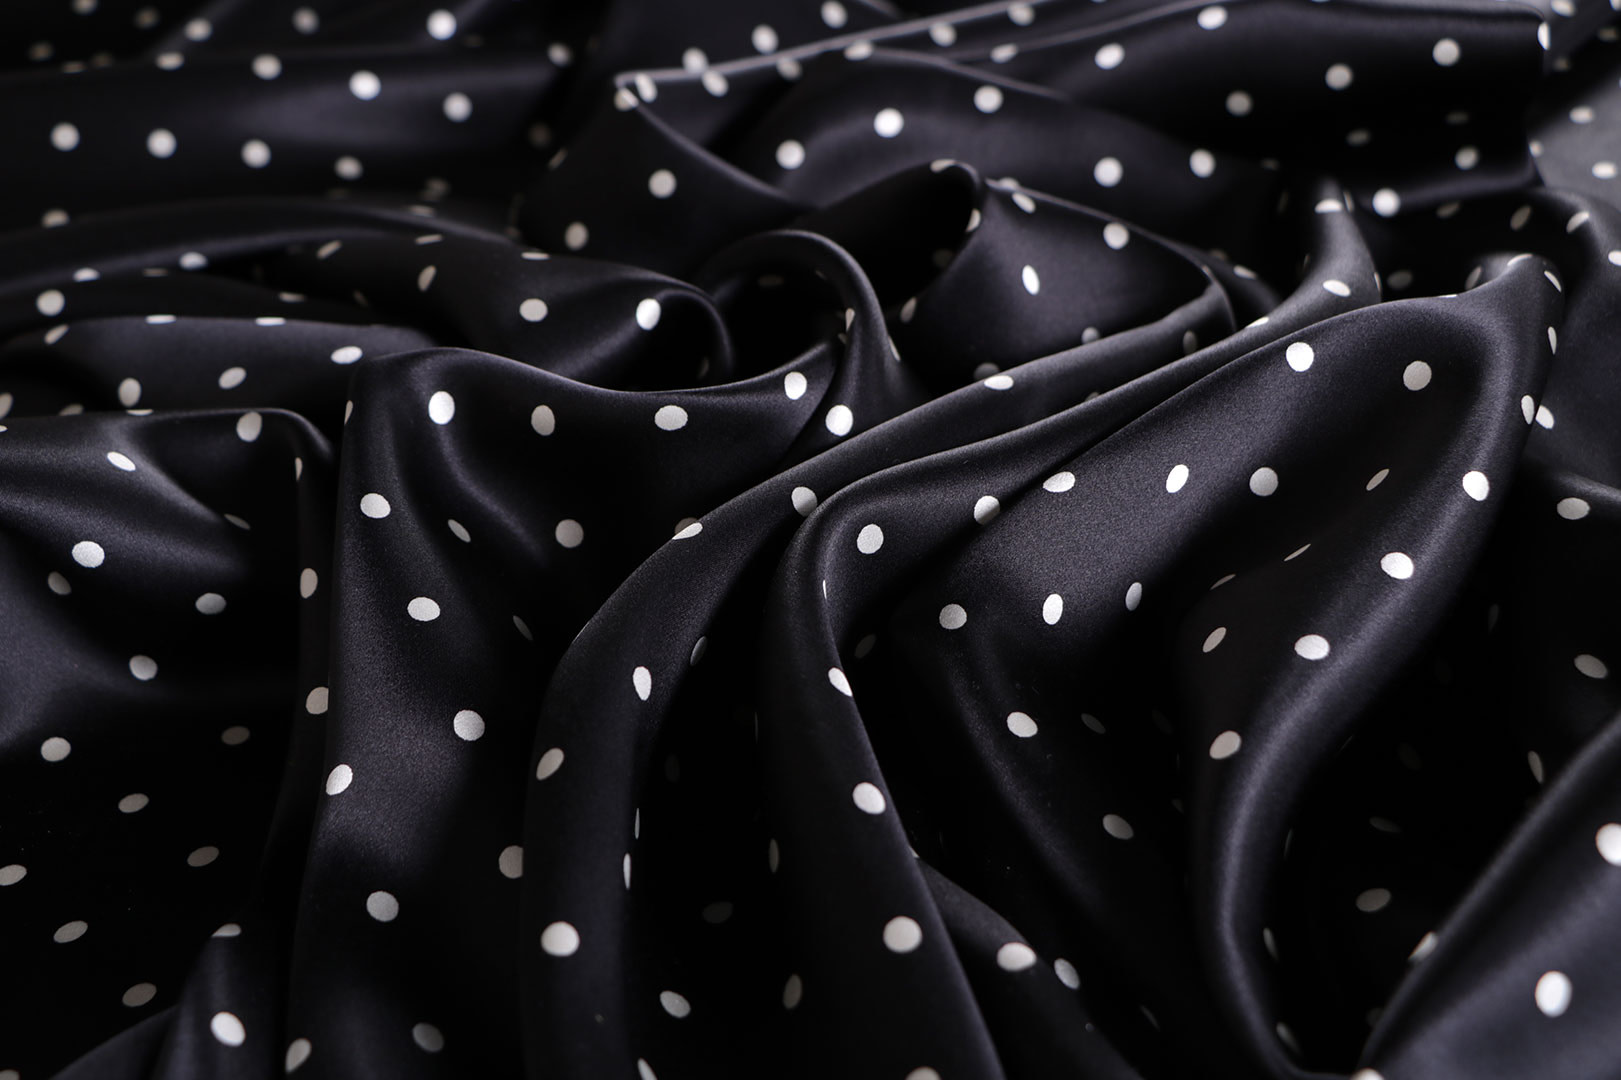 Black, White Silk Satin Polka Dot Fabric - Raso Se Omnibus Pois 201901